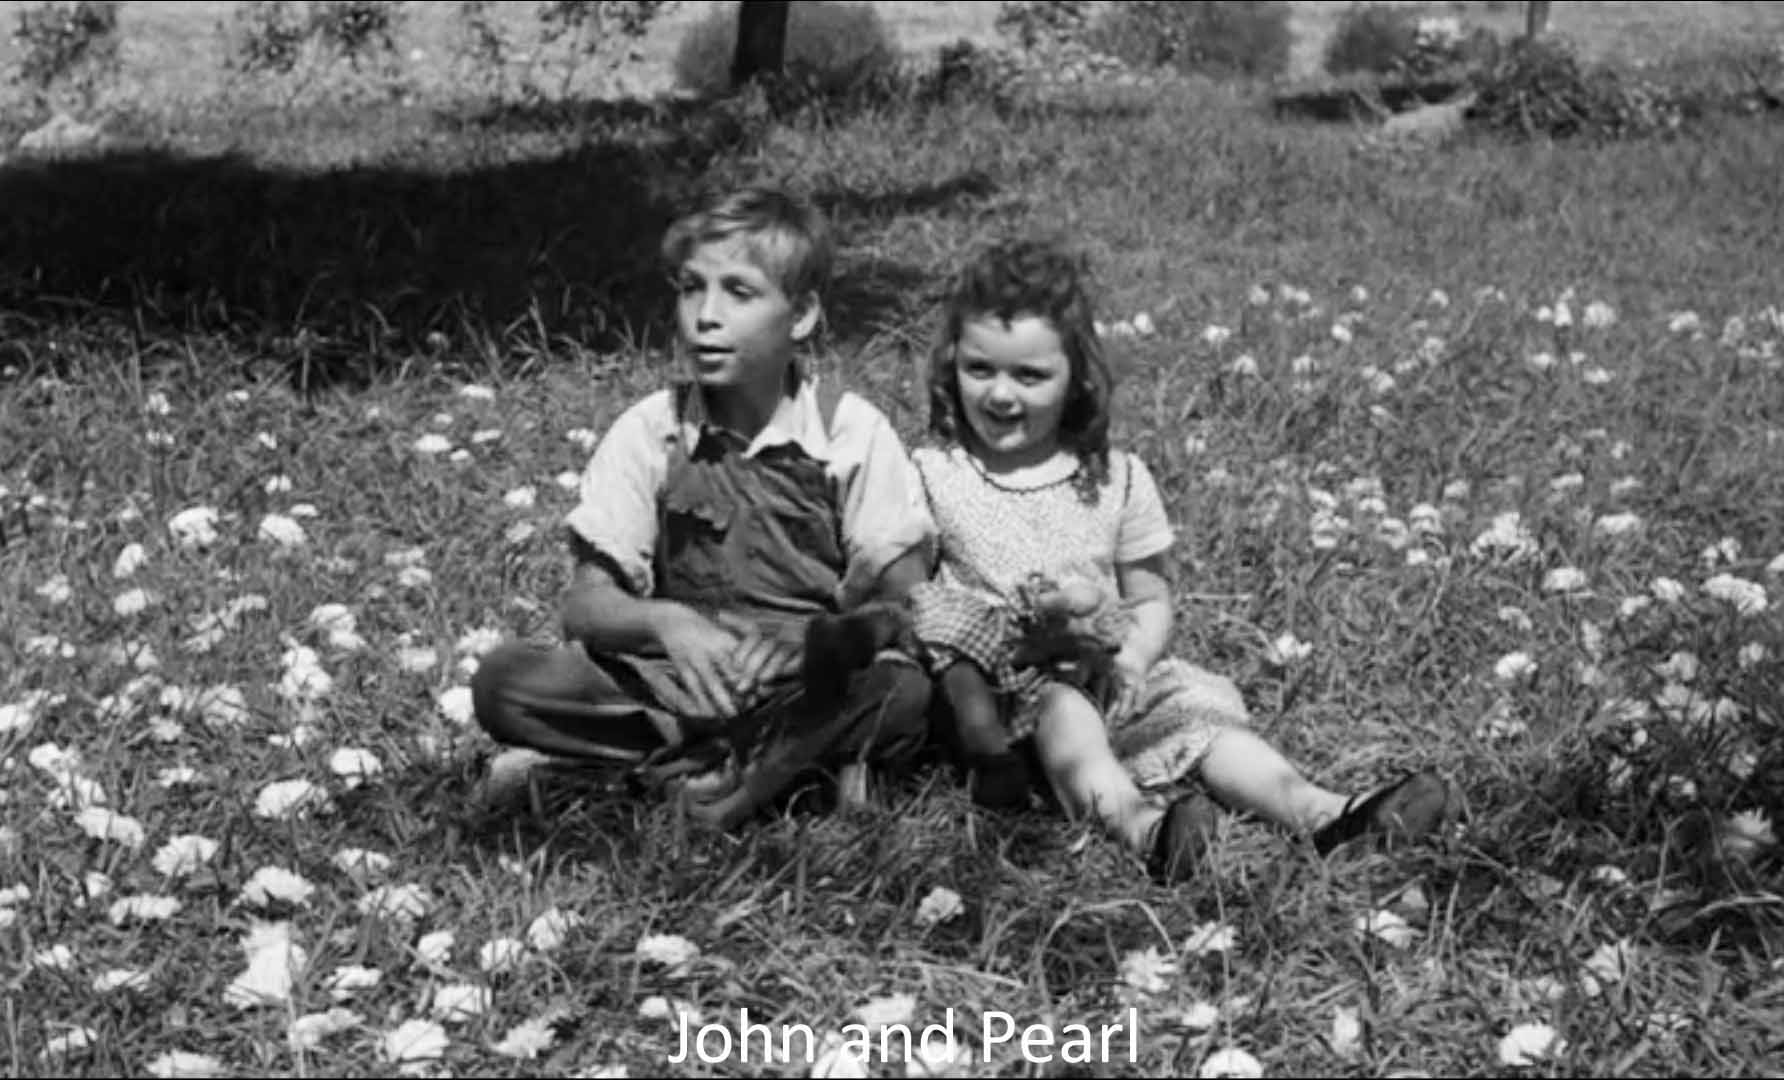 John and Pearl